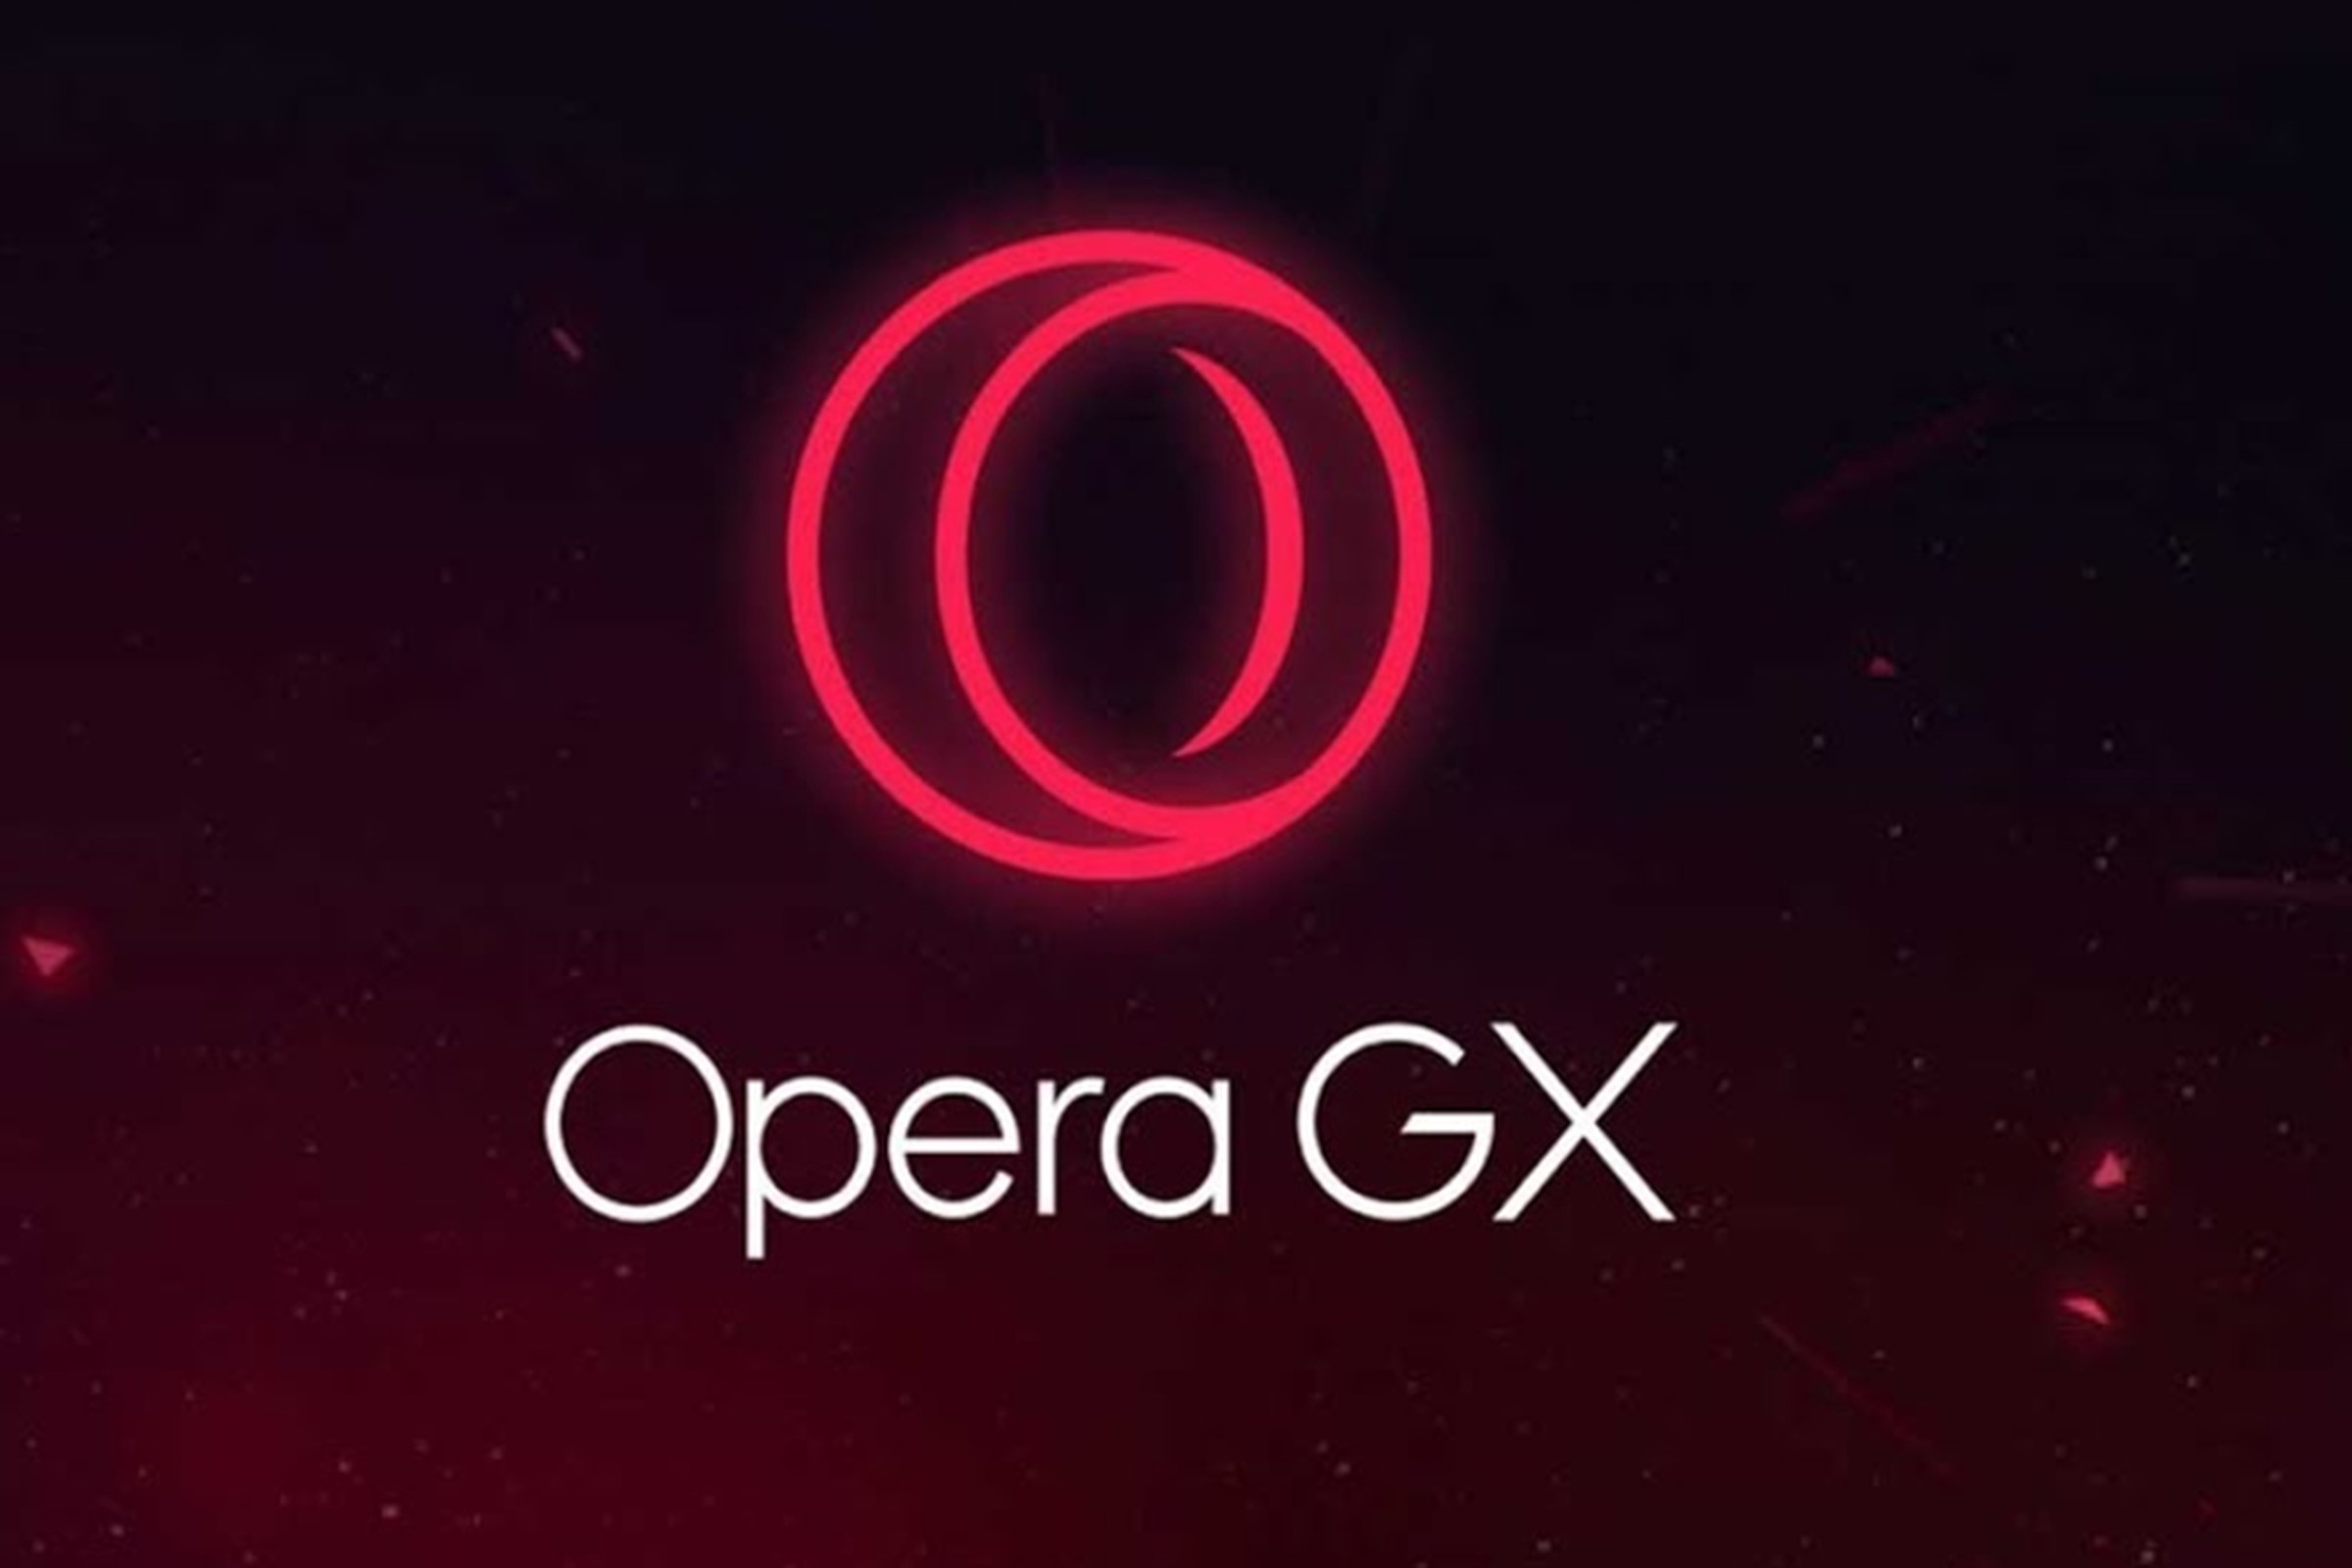 Illustration of the Opera GX logo